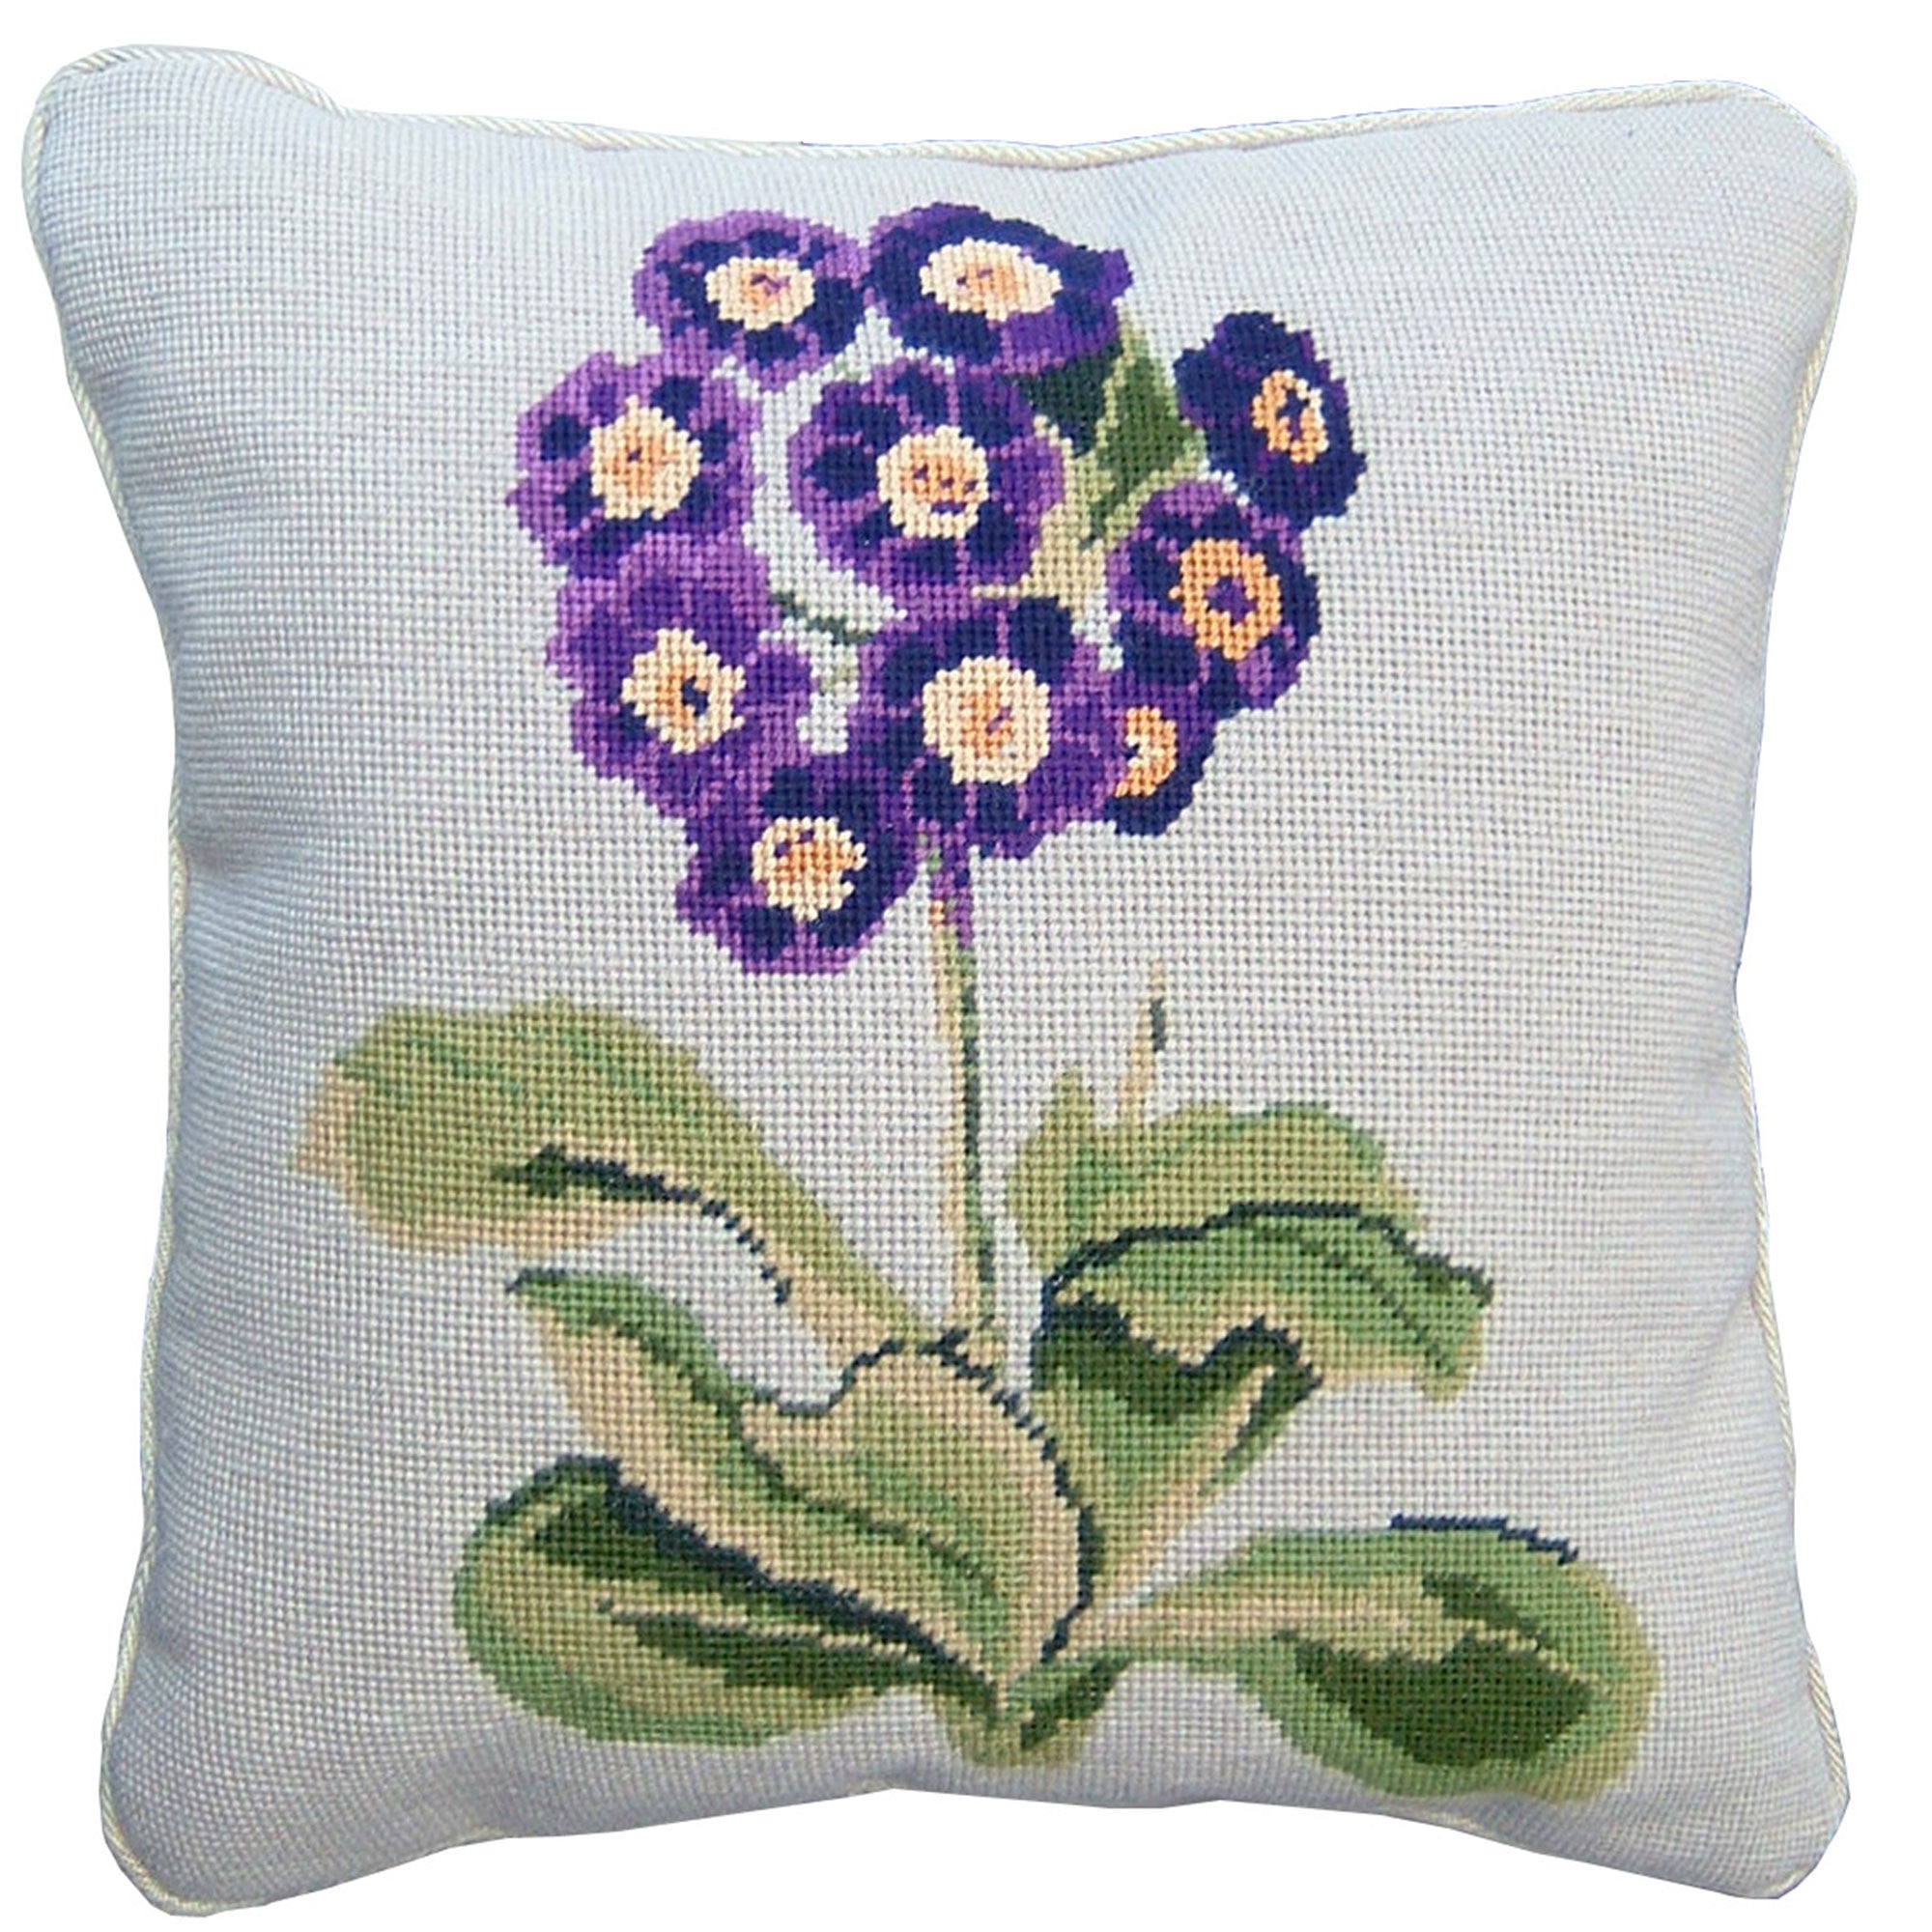 Handmade needlepoint cushion with purple auricula flower on cream background